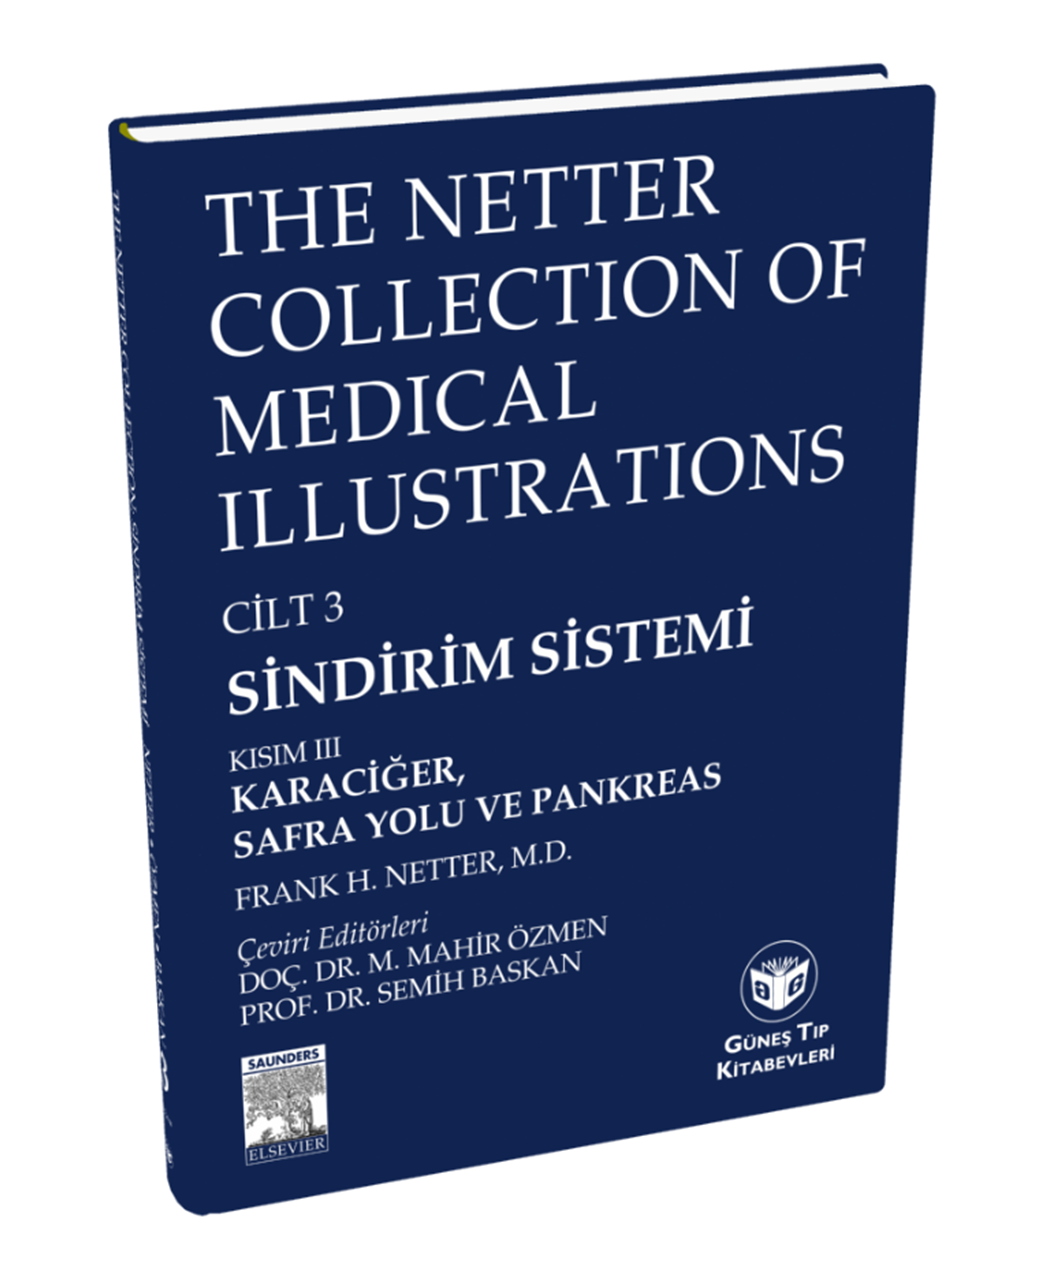 The Netter Collection Of Medical Illustrations Sindirim Sistemi: Karaciğer, Safra Yolu ve Pankreas